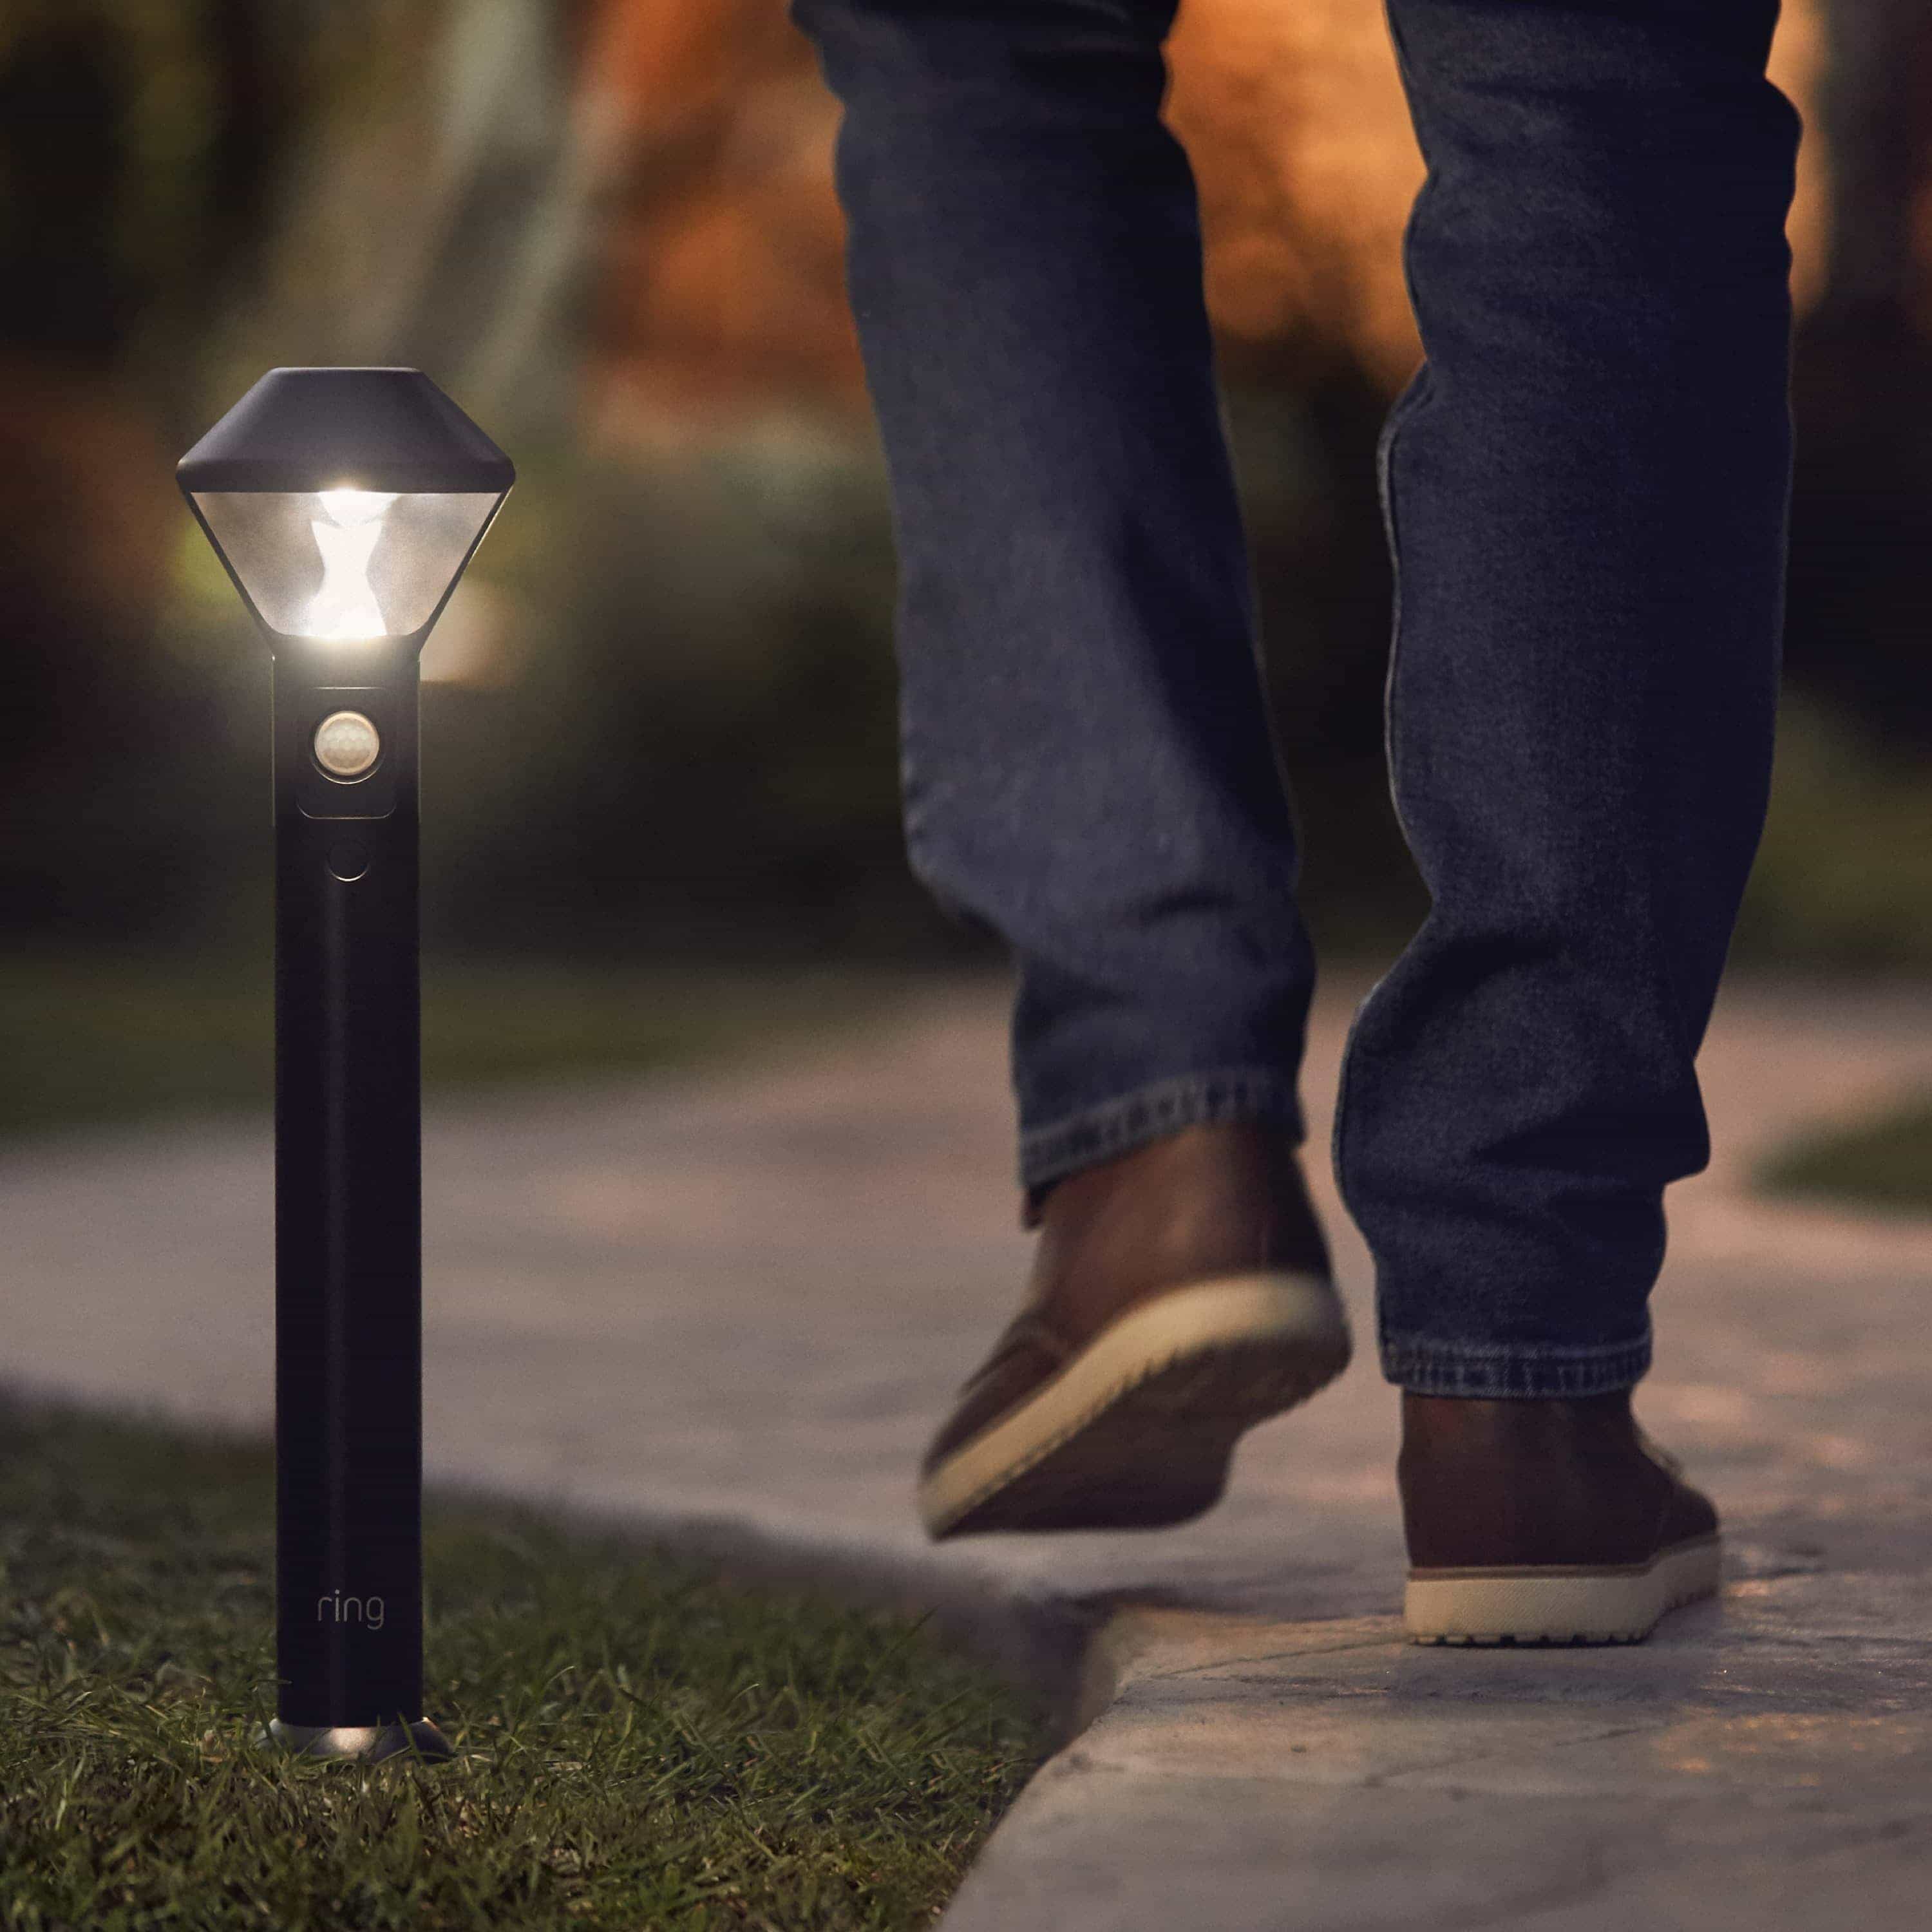 Smart Lighting Pathlight Battery - Outdoors at night, a person walks past an illuminated Pathlight Battery. 